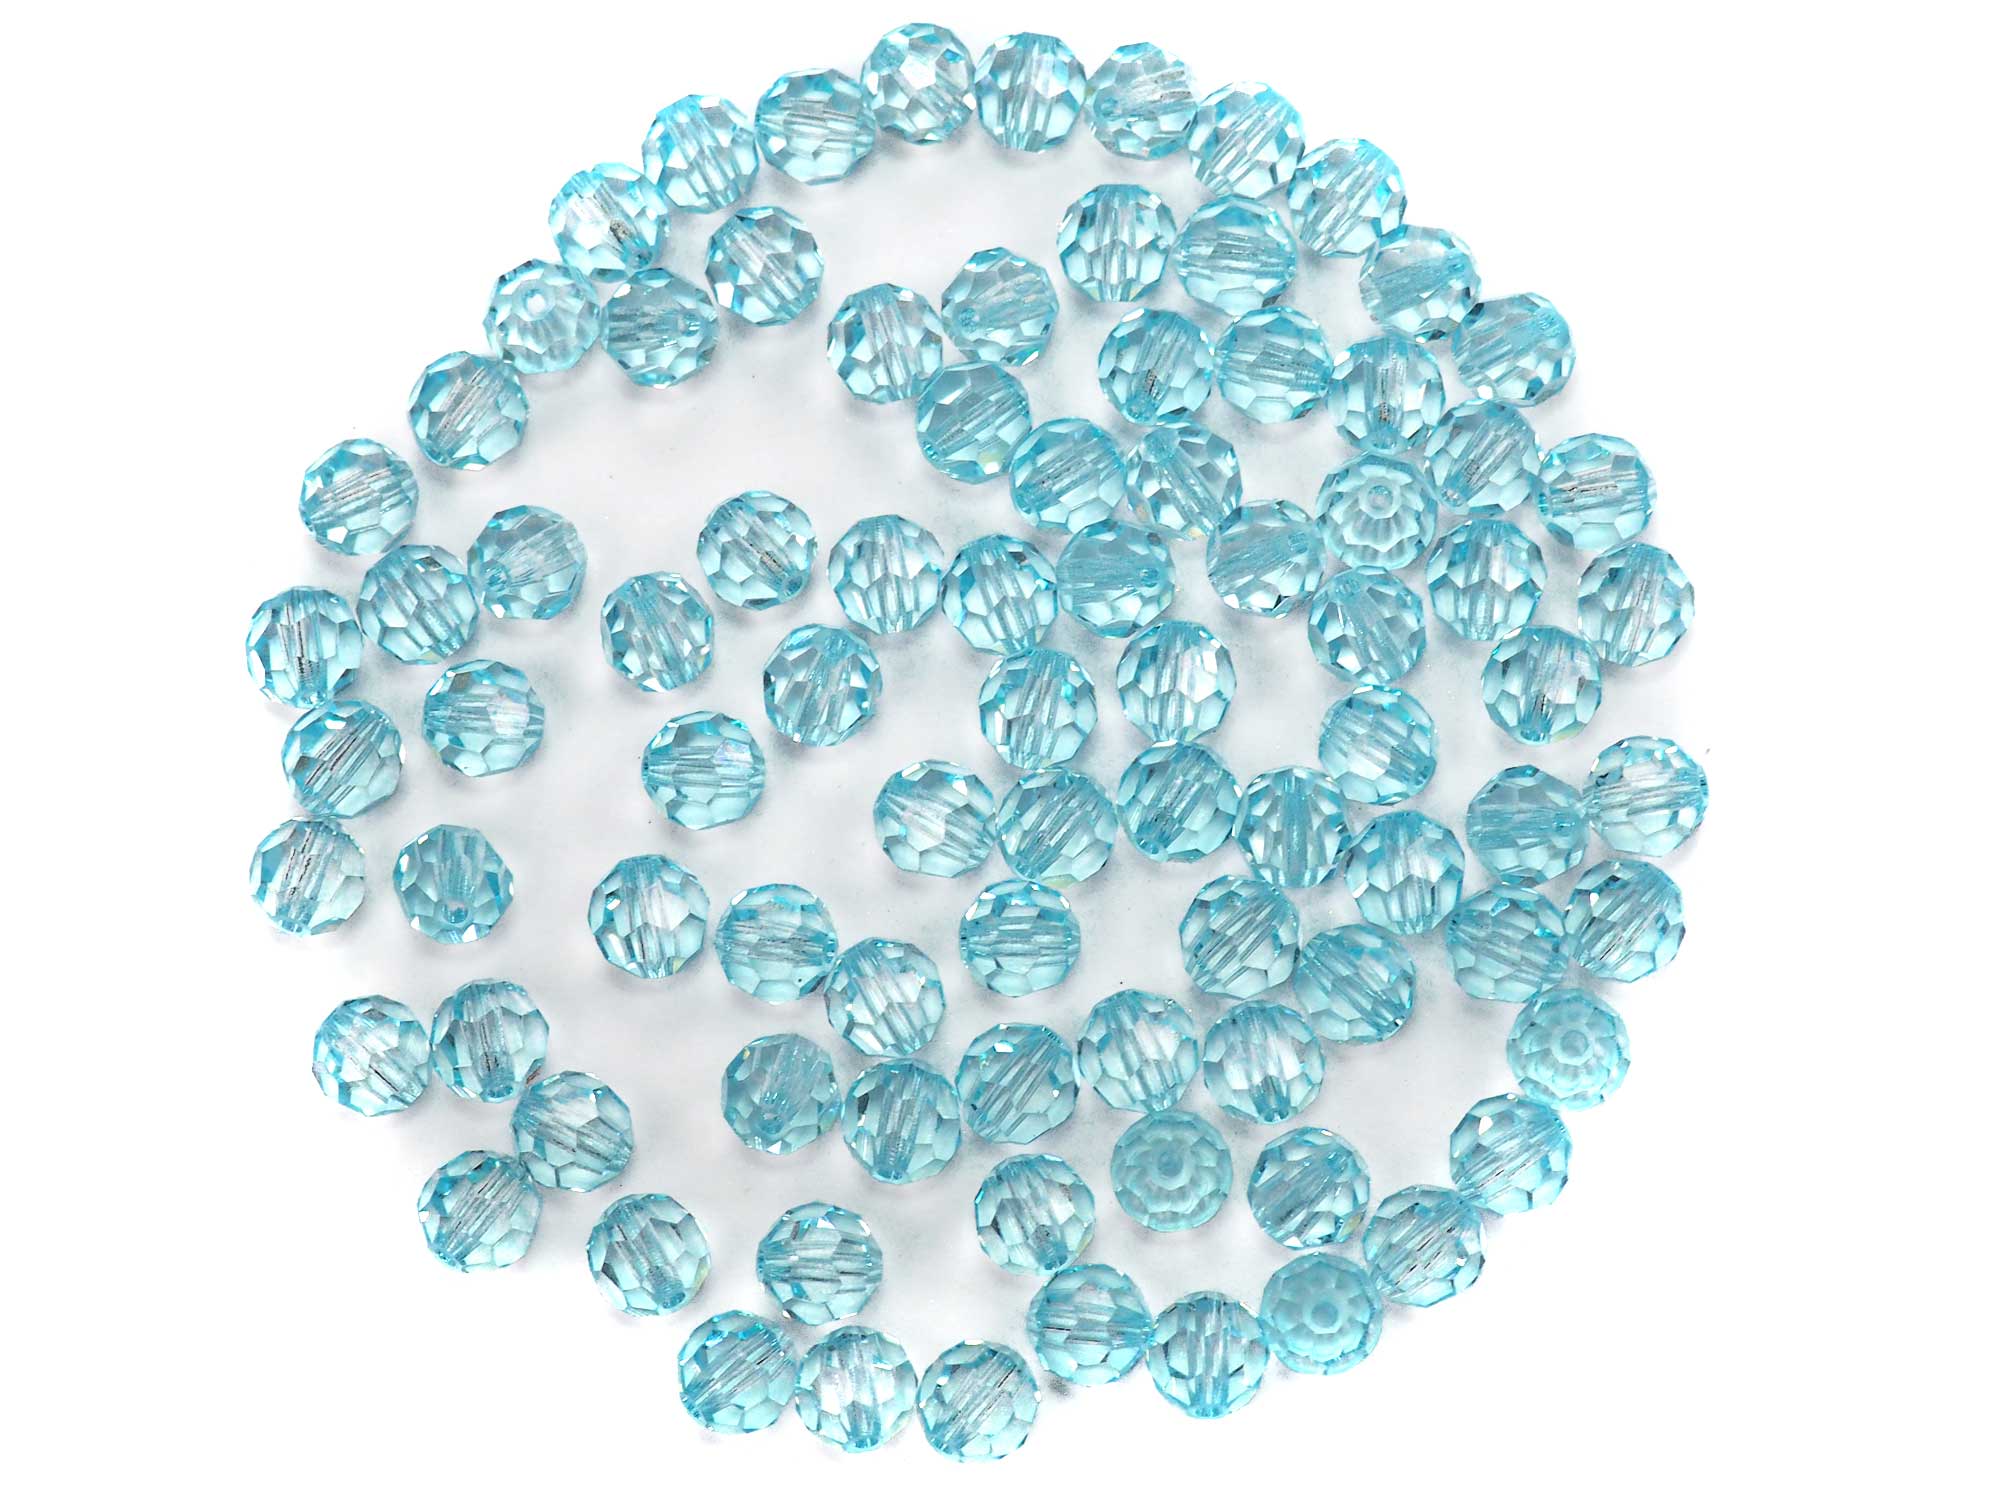 Crystal Light Blue coated Czech Machine Cut Round Crystal Beads 10mm 24pcs J151